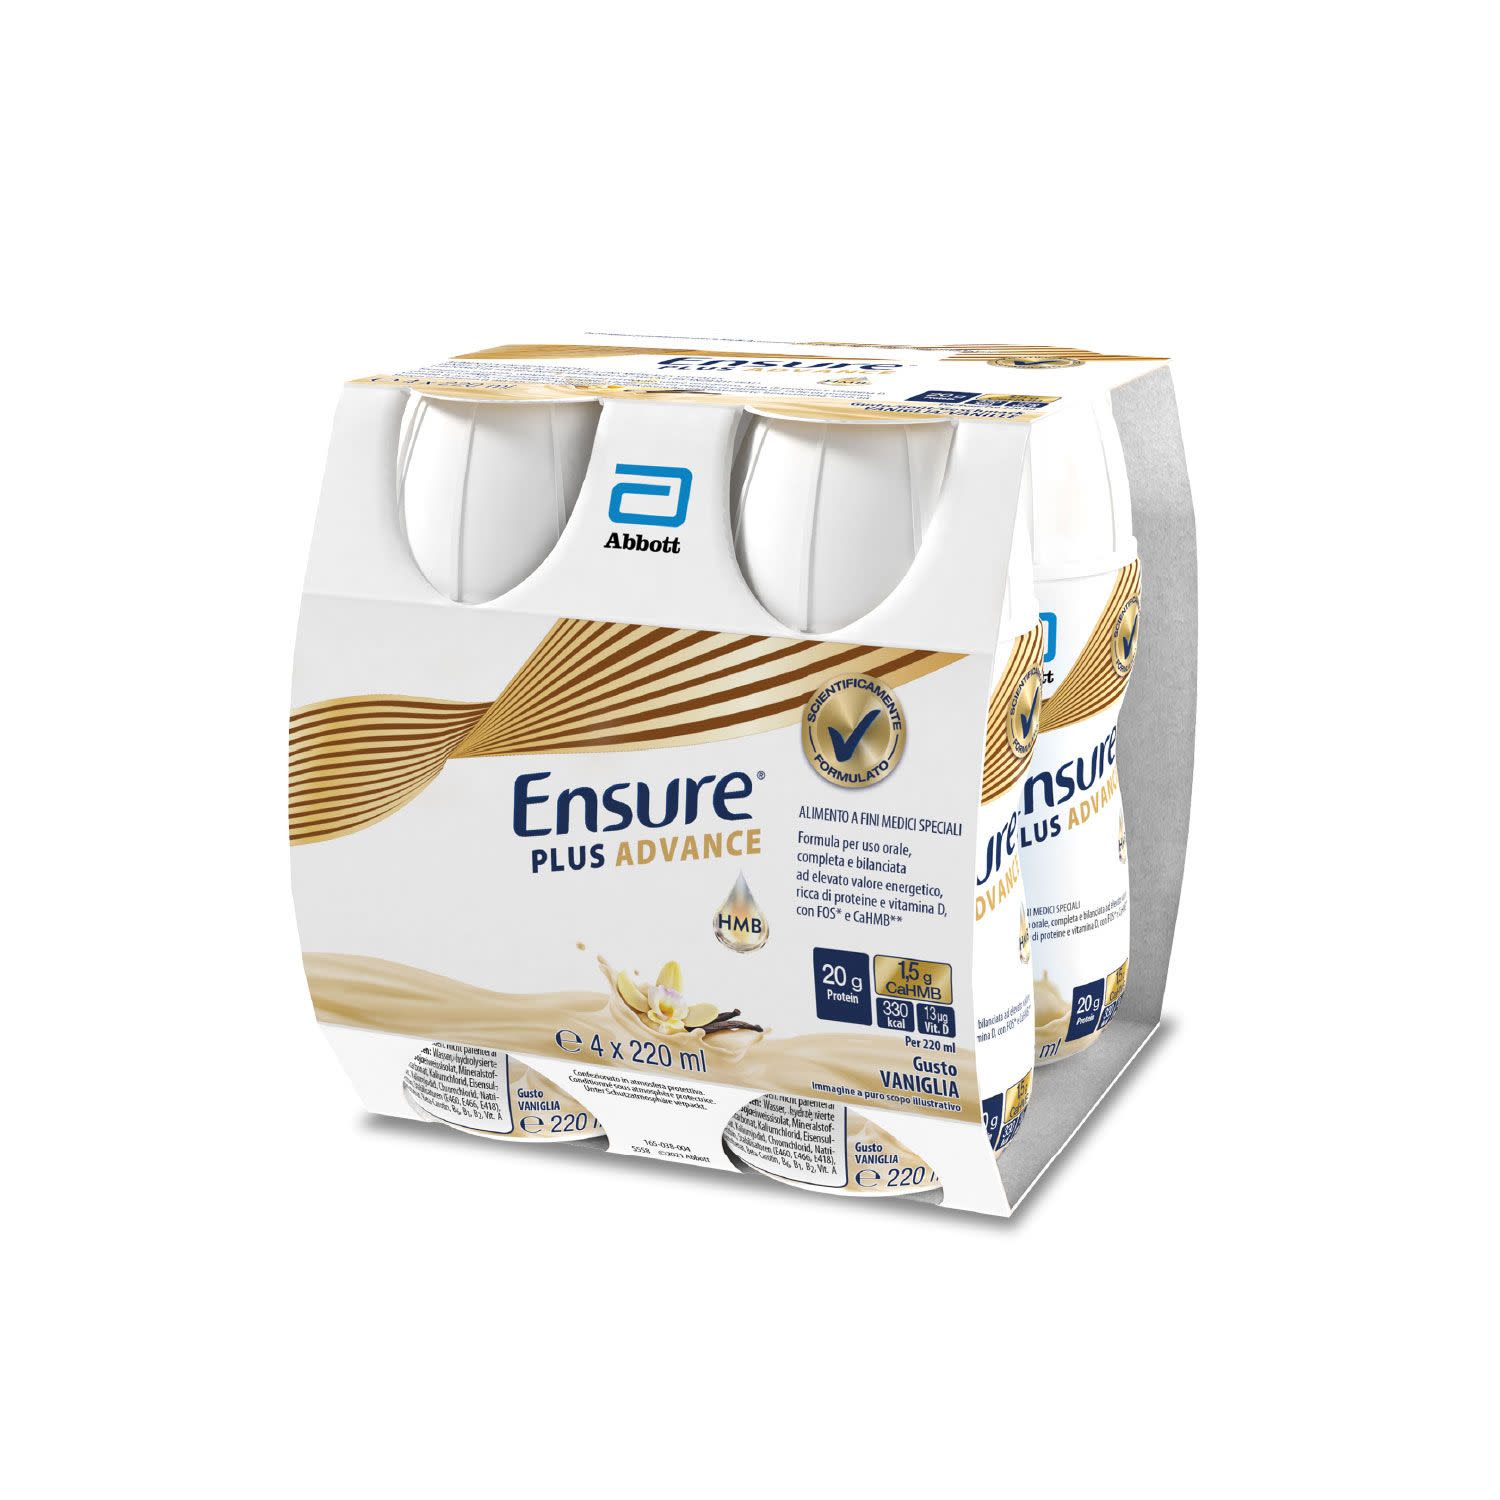 935722102 - Ensure Plus Advance supplemento alimentare proteico vaniglia 4x220ml - 7881878_2.jpg